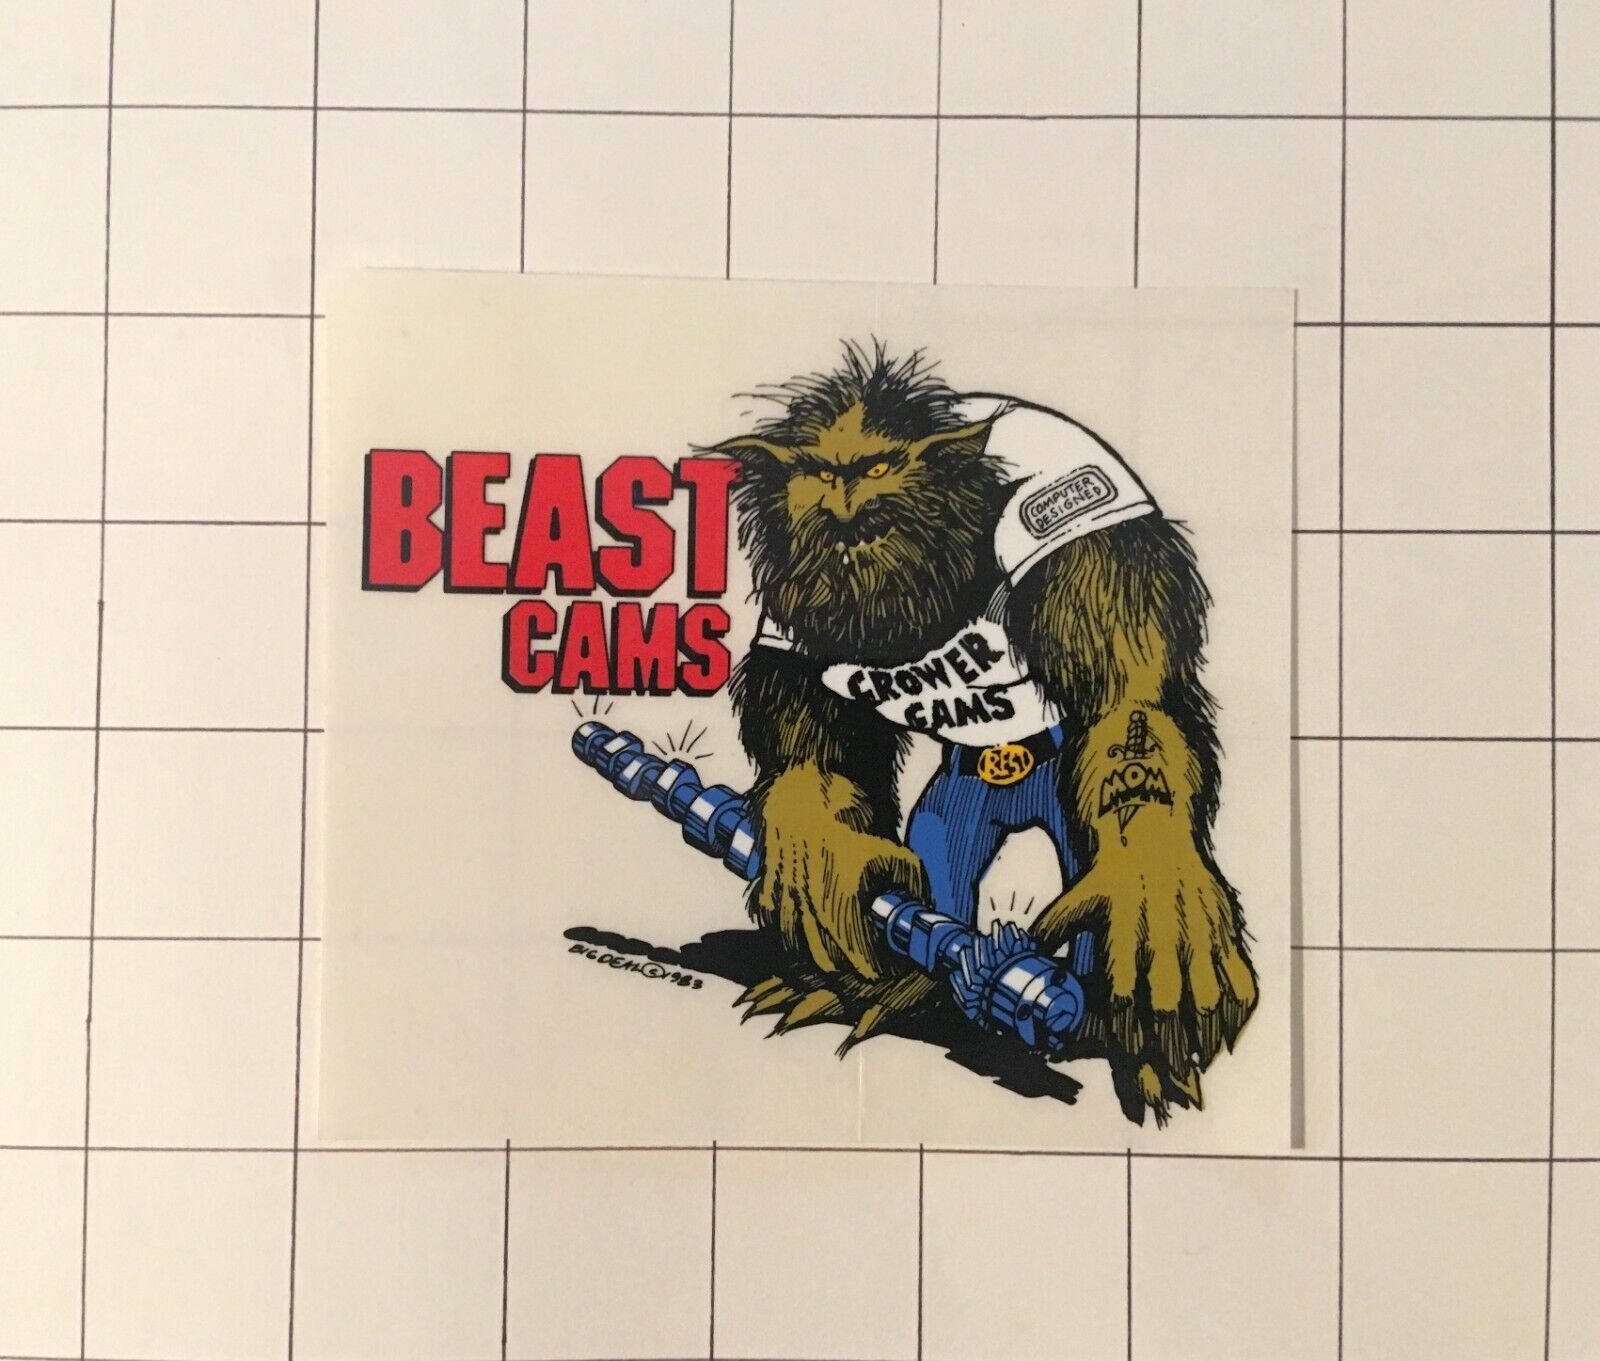 Crower Beast Cams decal - Original Vintage Racing Decal/Sticker